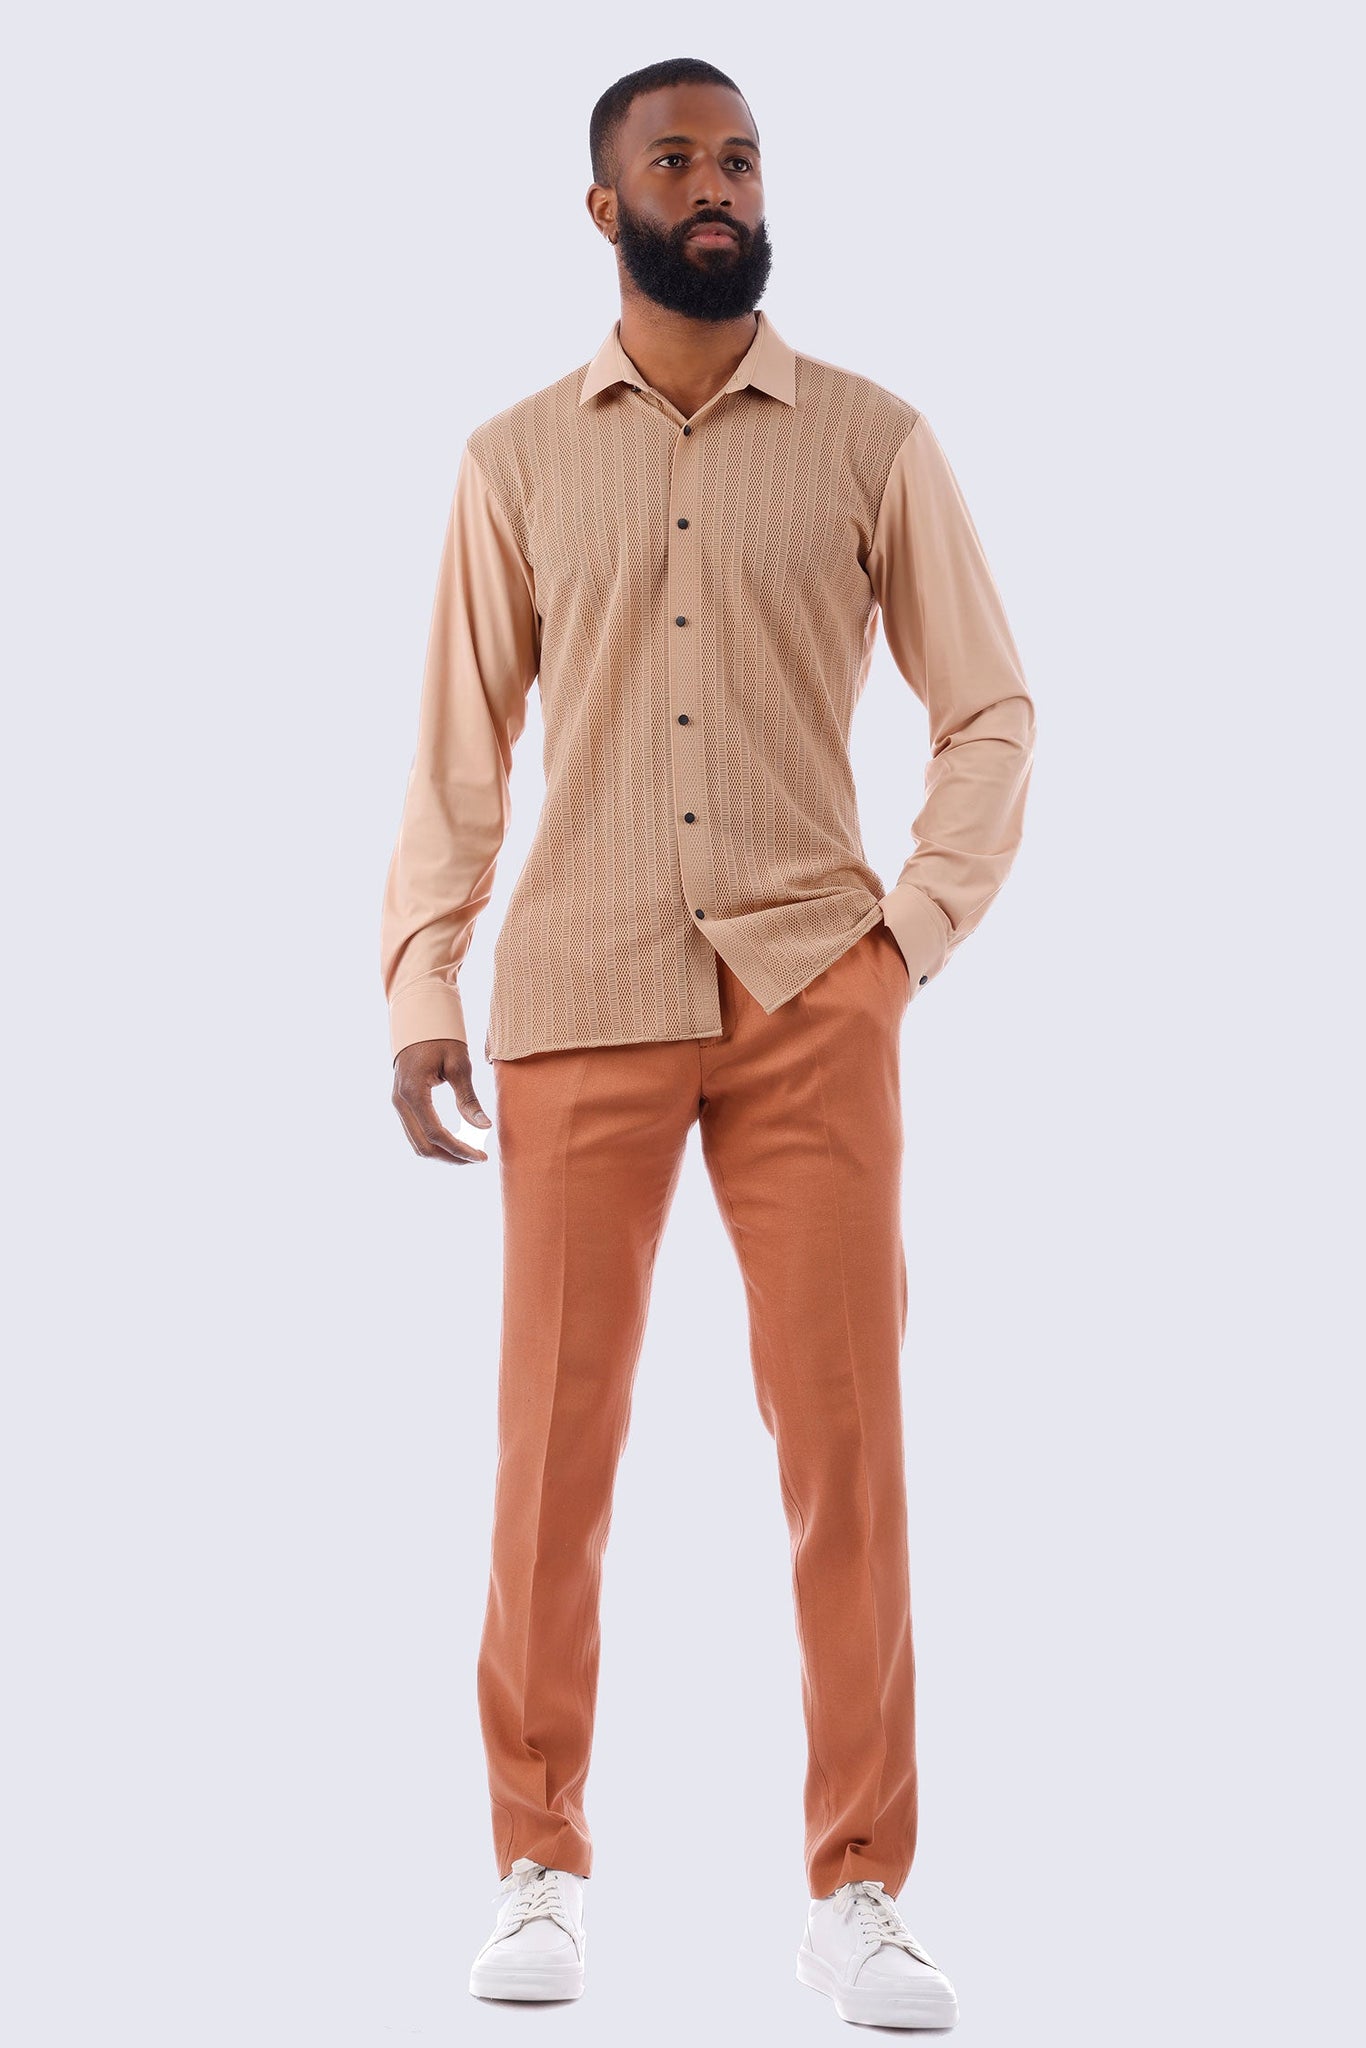 Barabas Wholesale Men's See-Through Breathable Long Sleeve Shirts 4B68 Tan